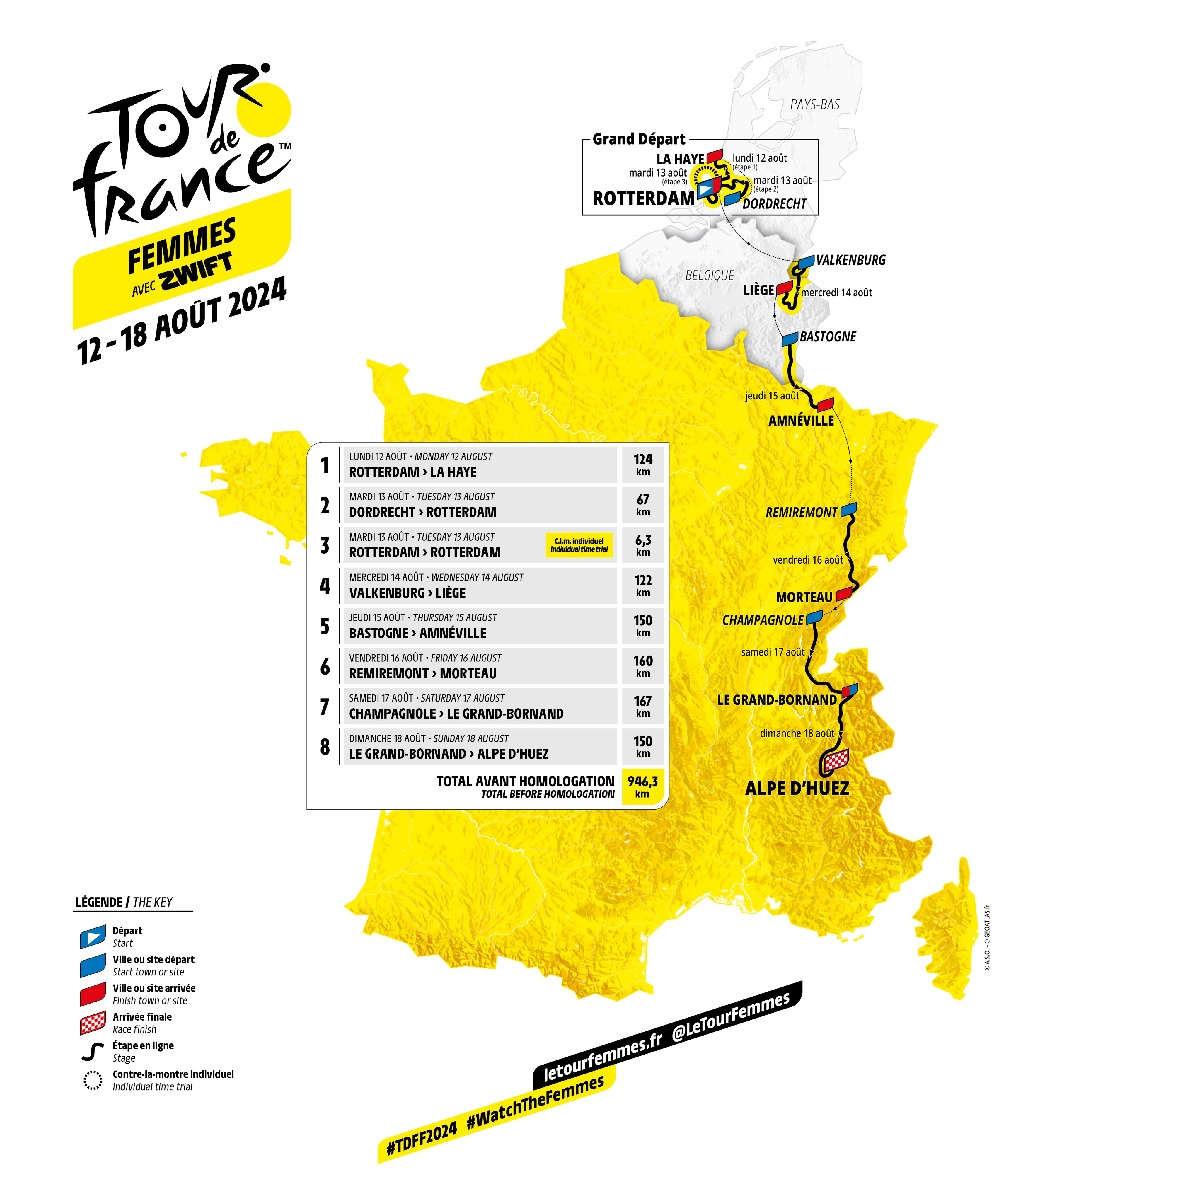 Women's Tour de France 2024 presented International Cycling Time News